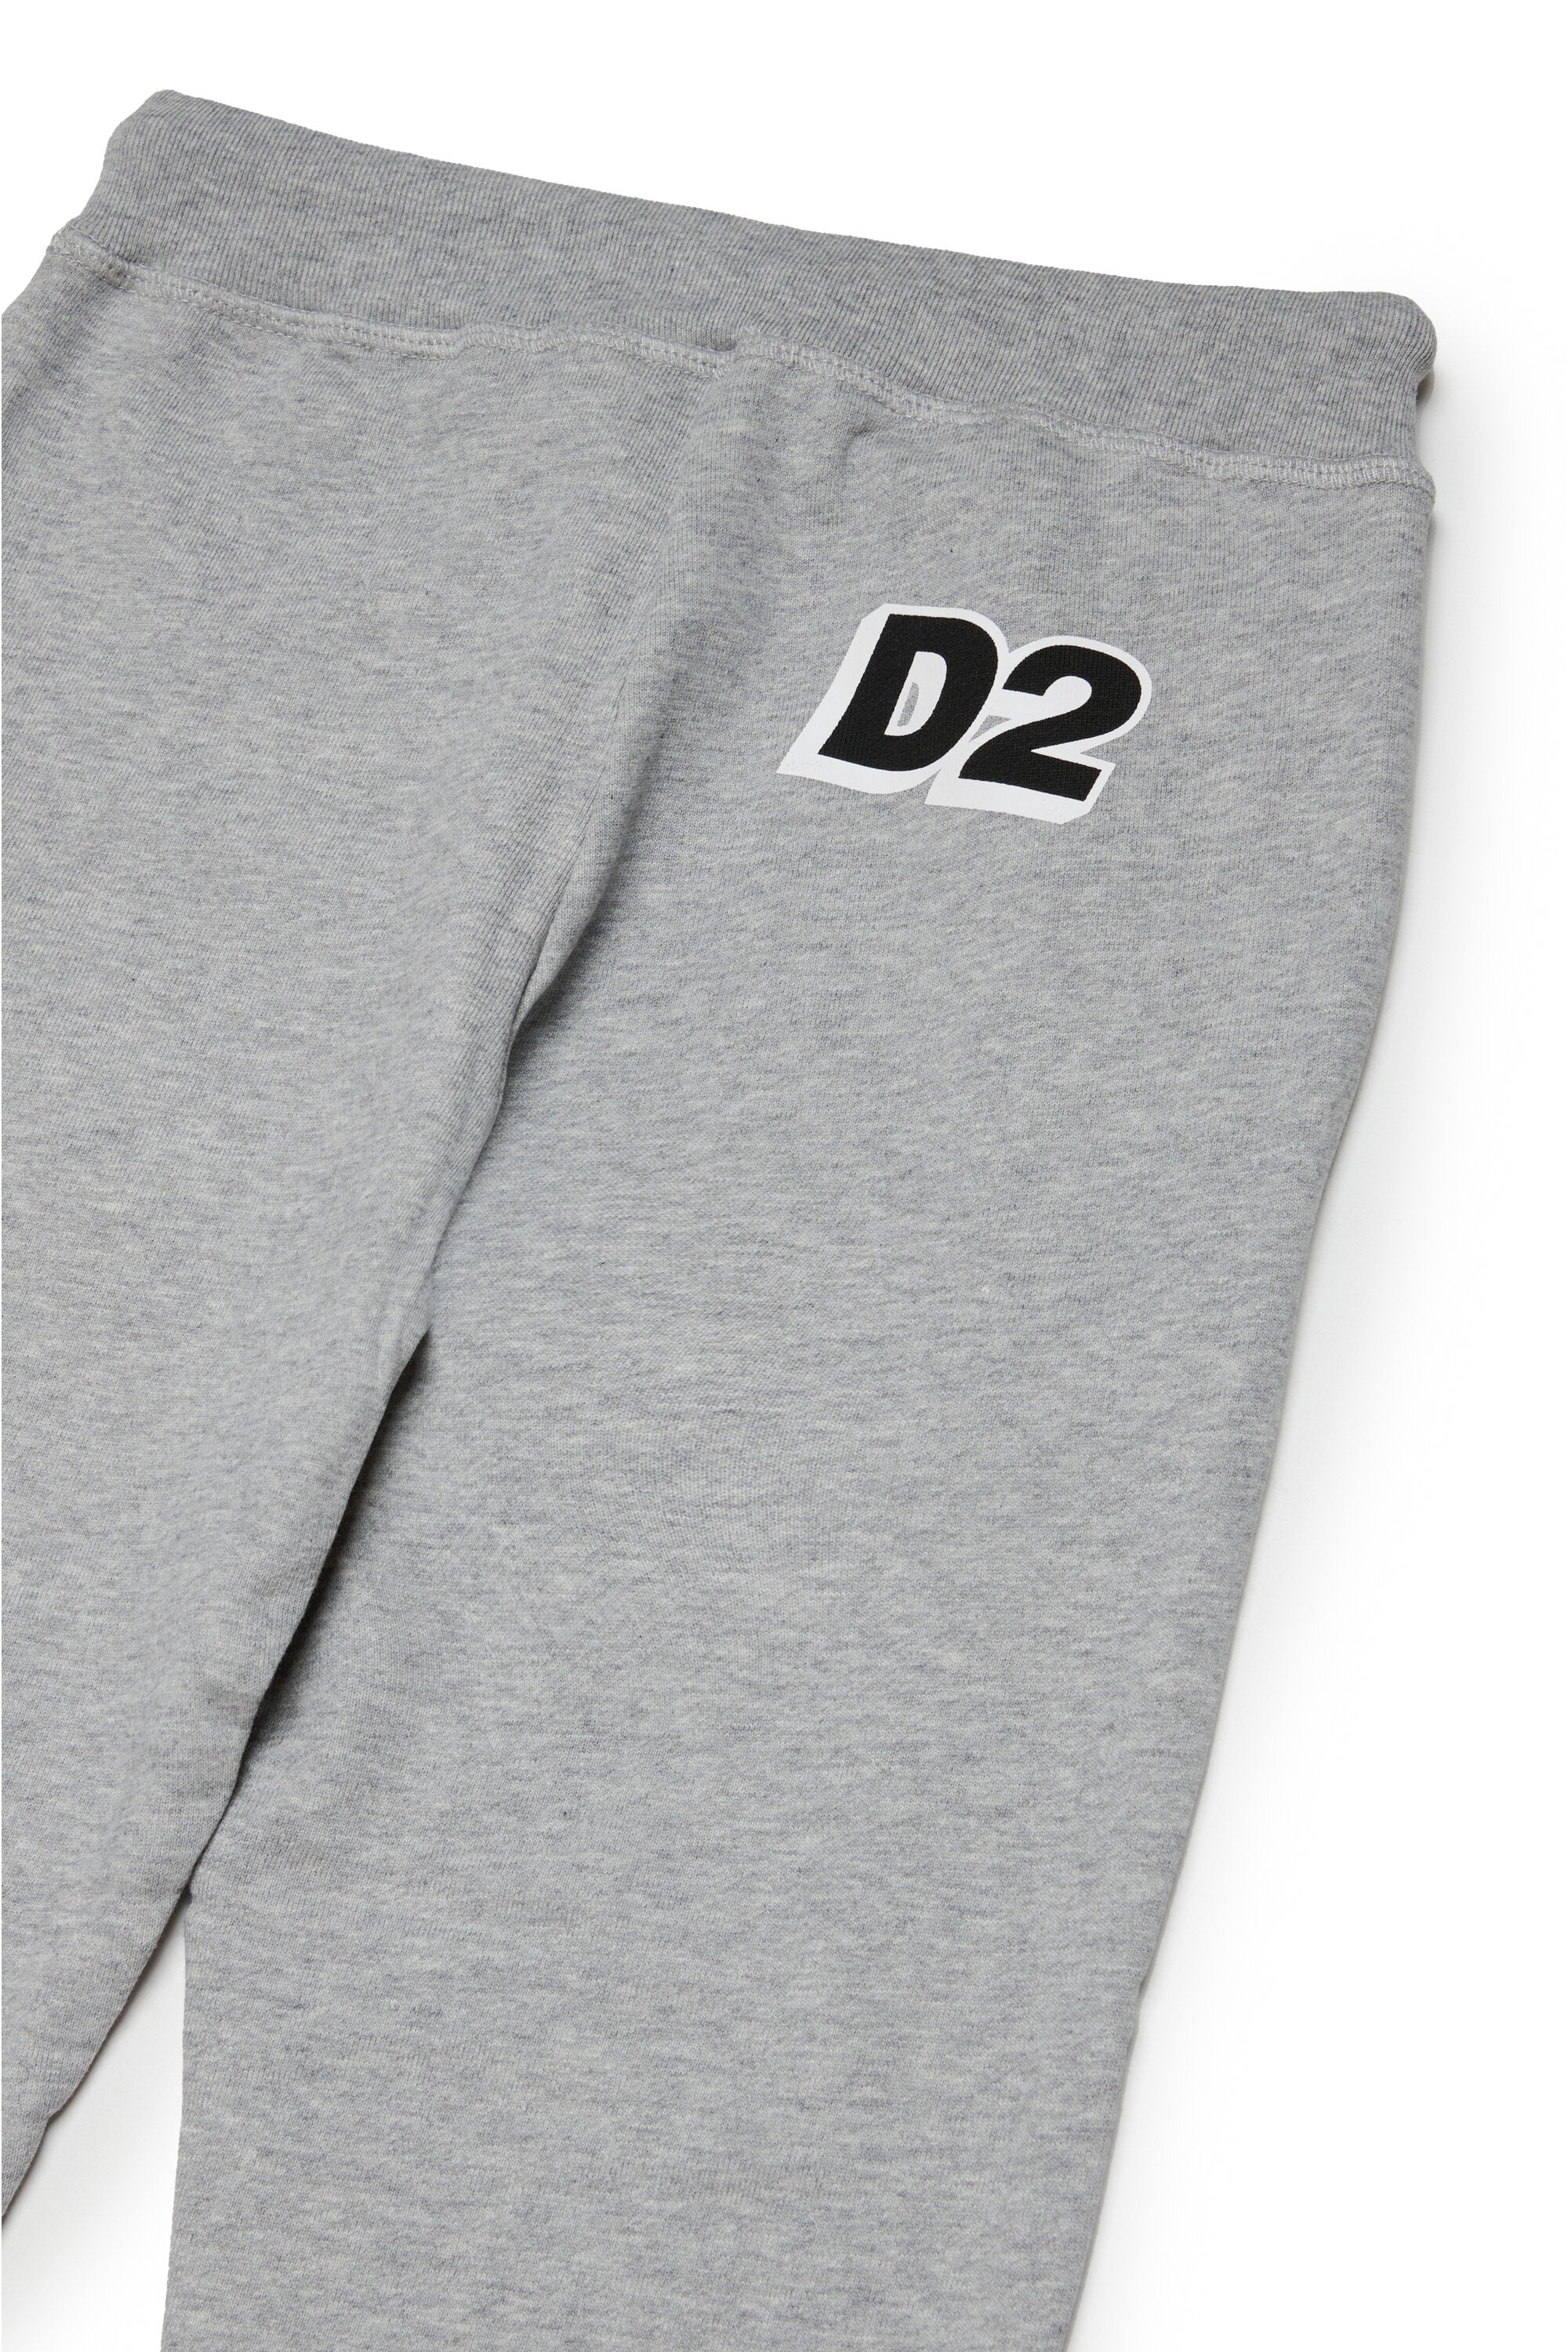 Mélange fleece loungewear pants with D2 logo